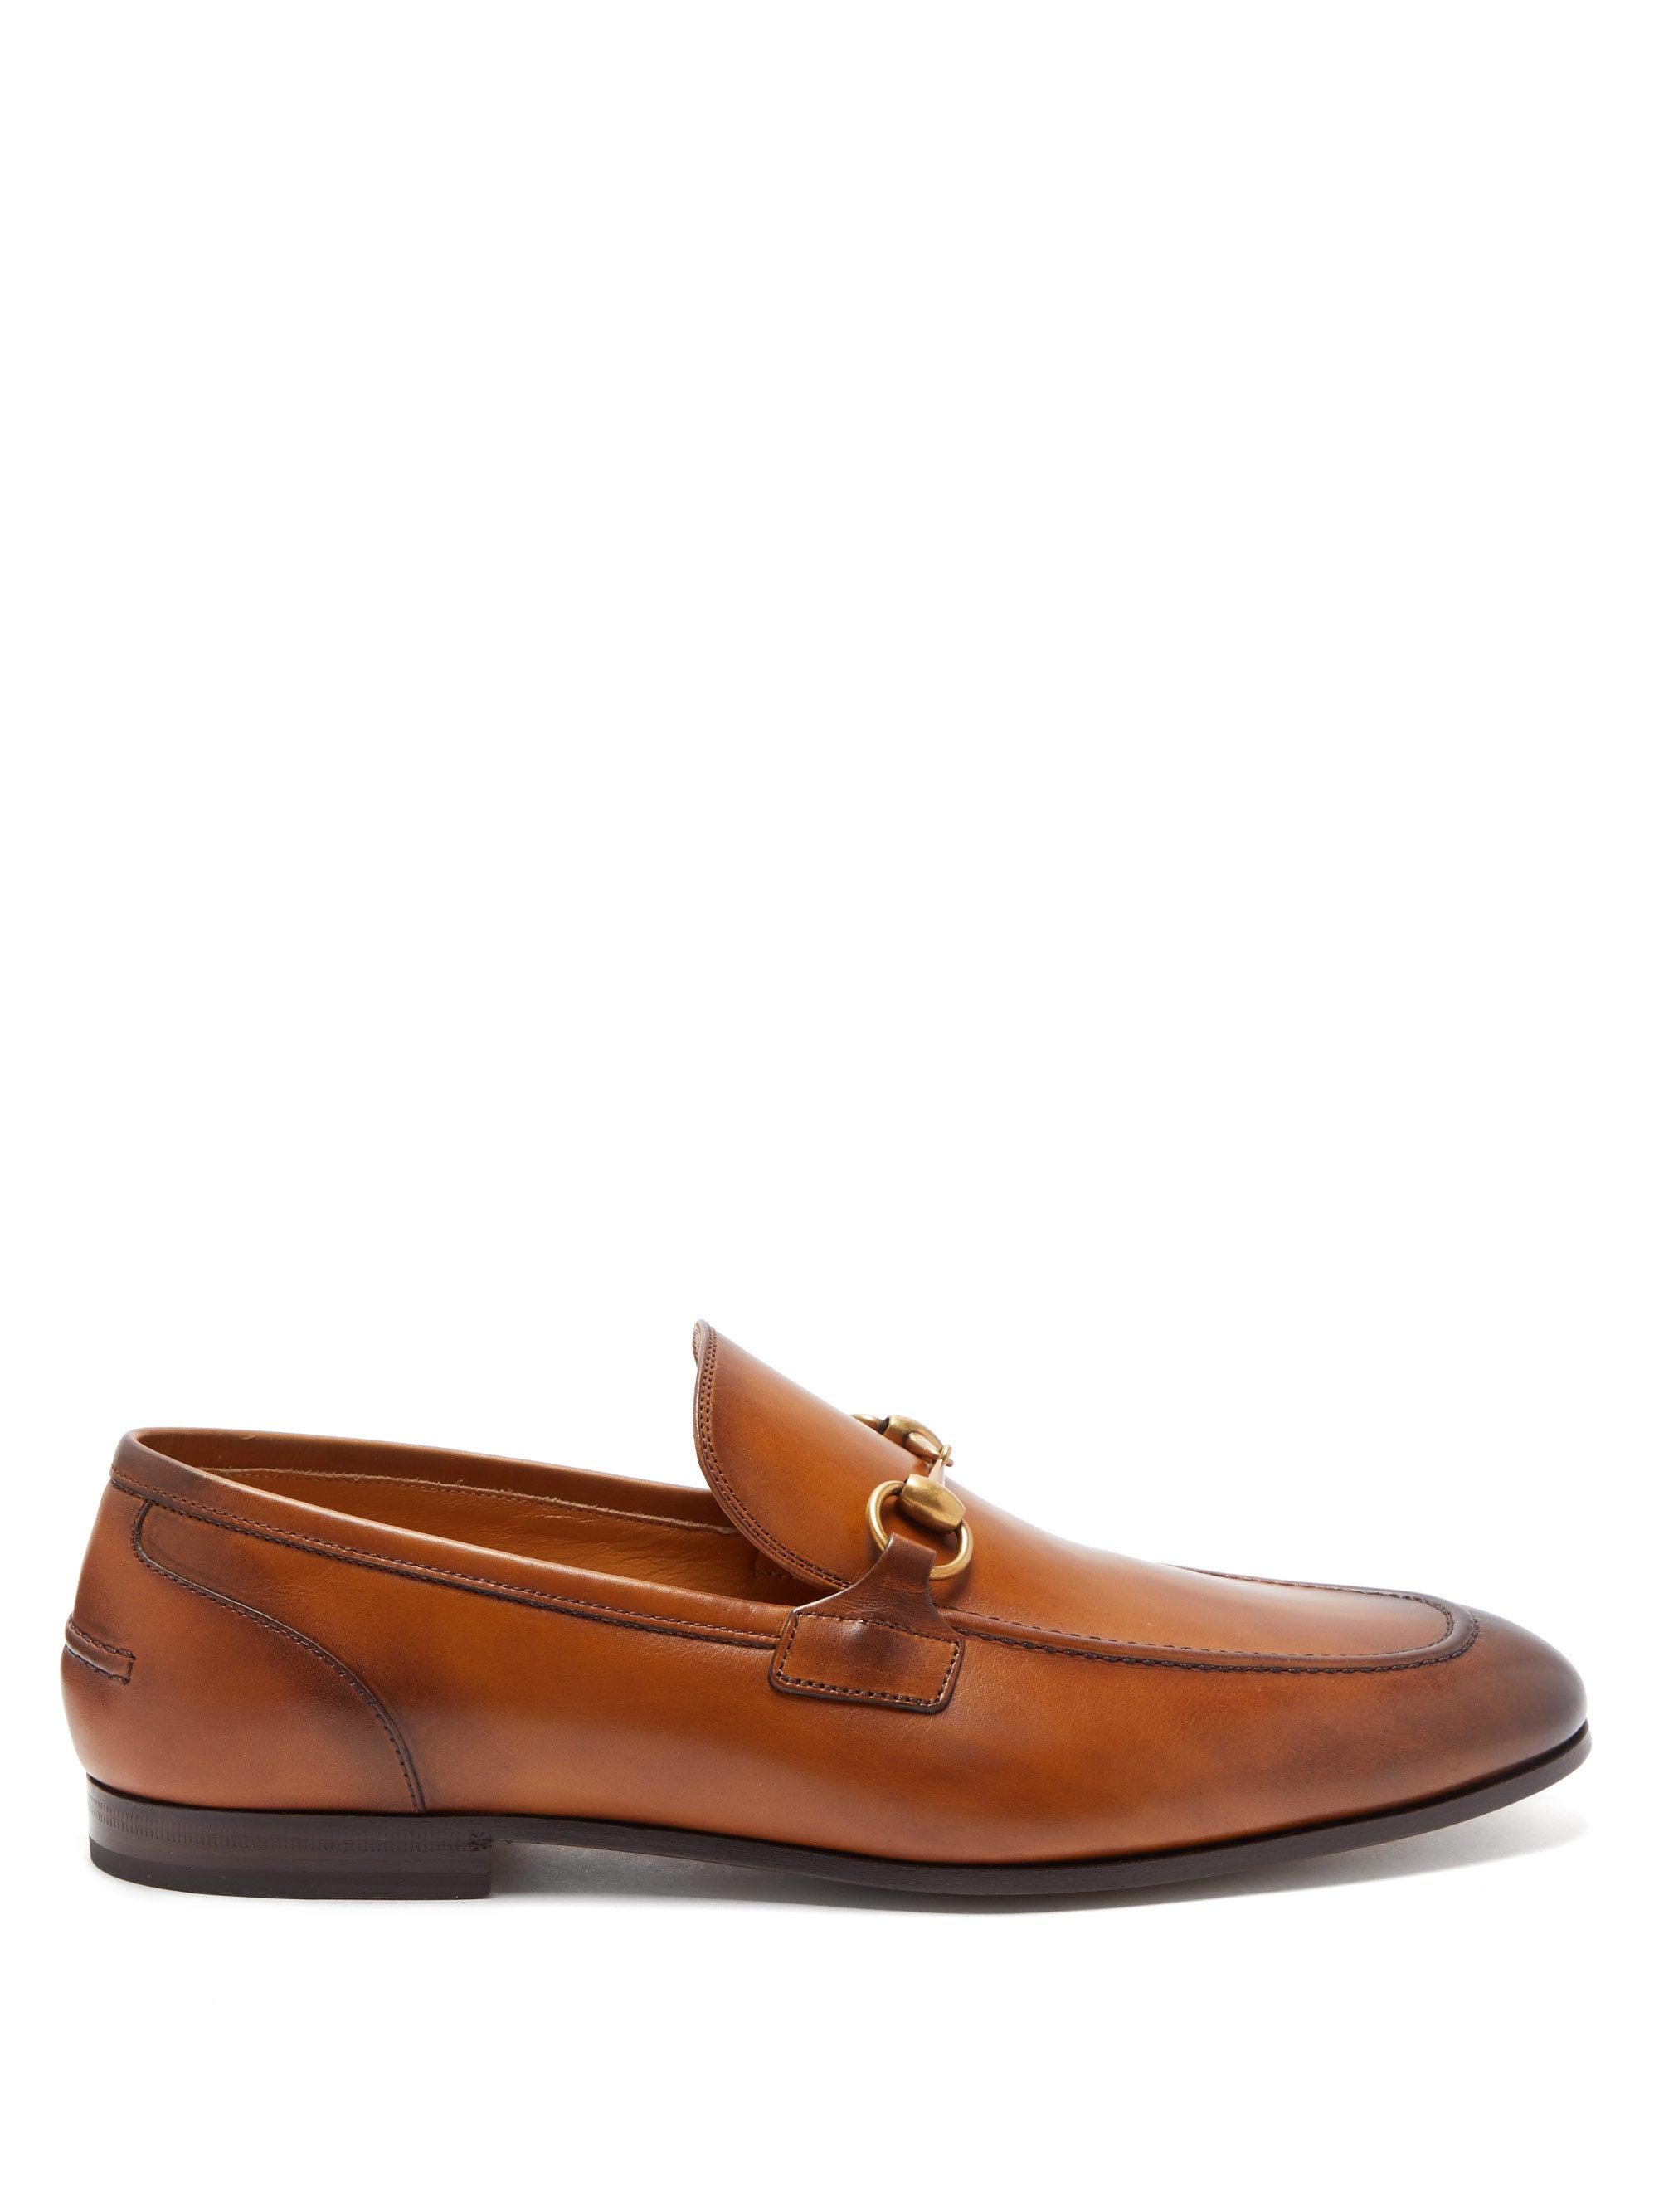 Gucci Jordan Horsebit Leather Loafers in Tan (Brown) for Men - Lyst